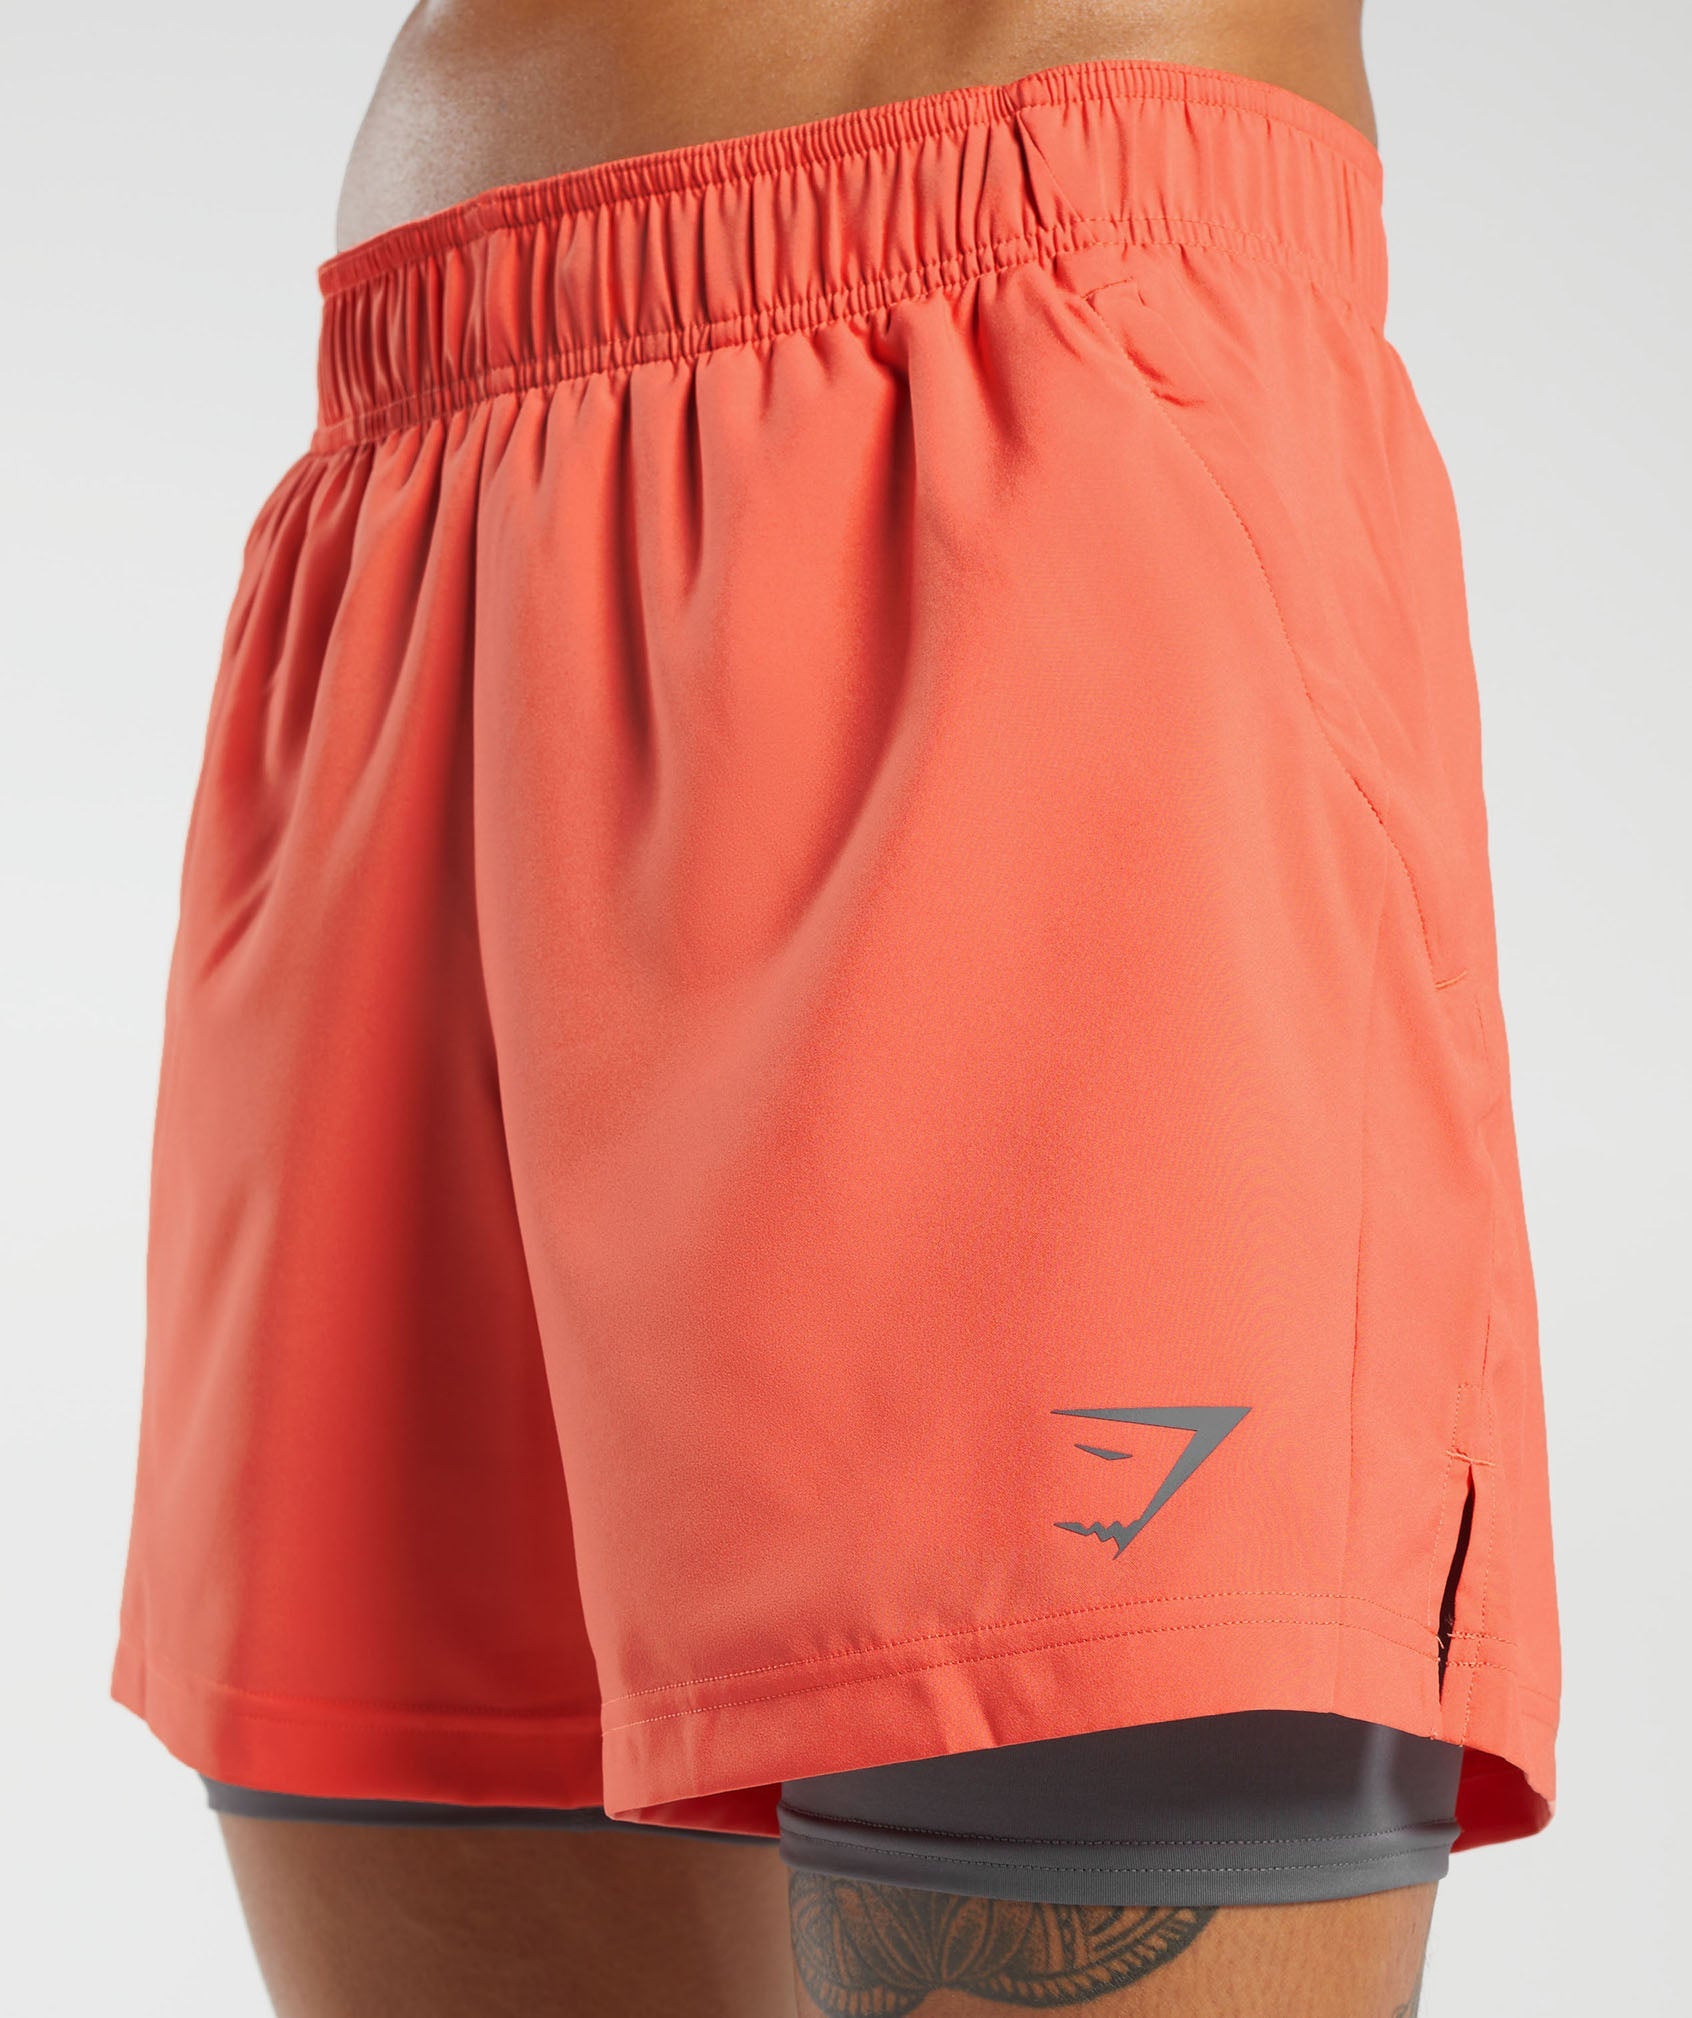 Gymshark Sport 5 2 in 1 Shorts - Aerospace Orange/Silhouette Grey